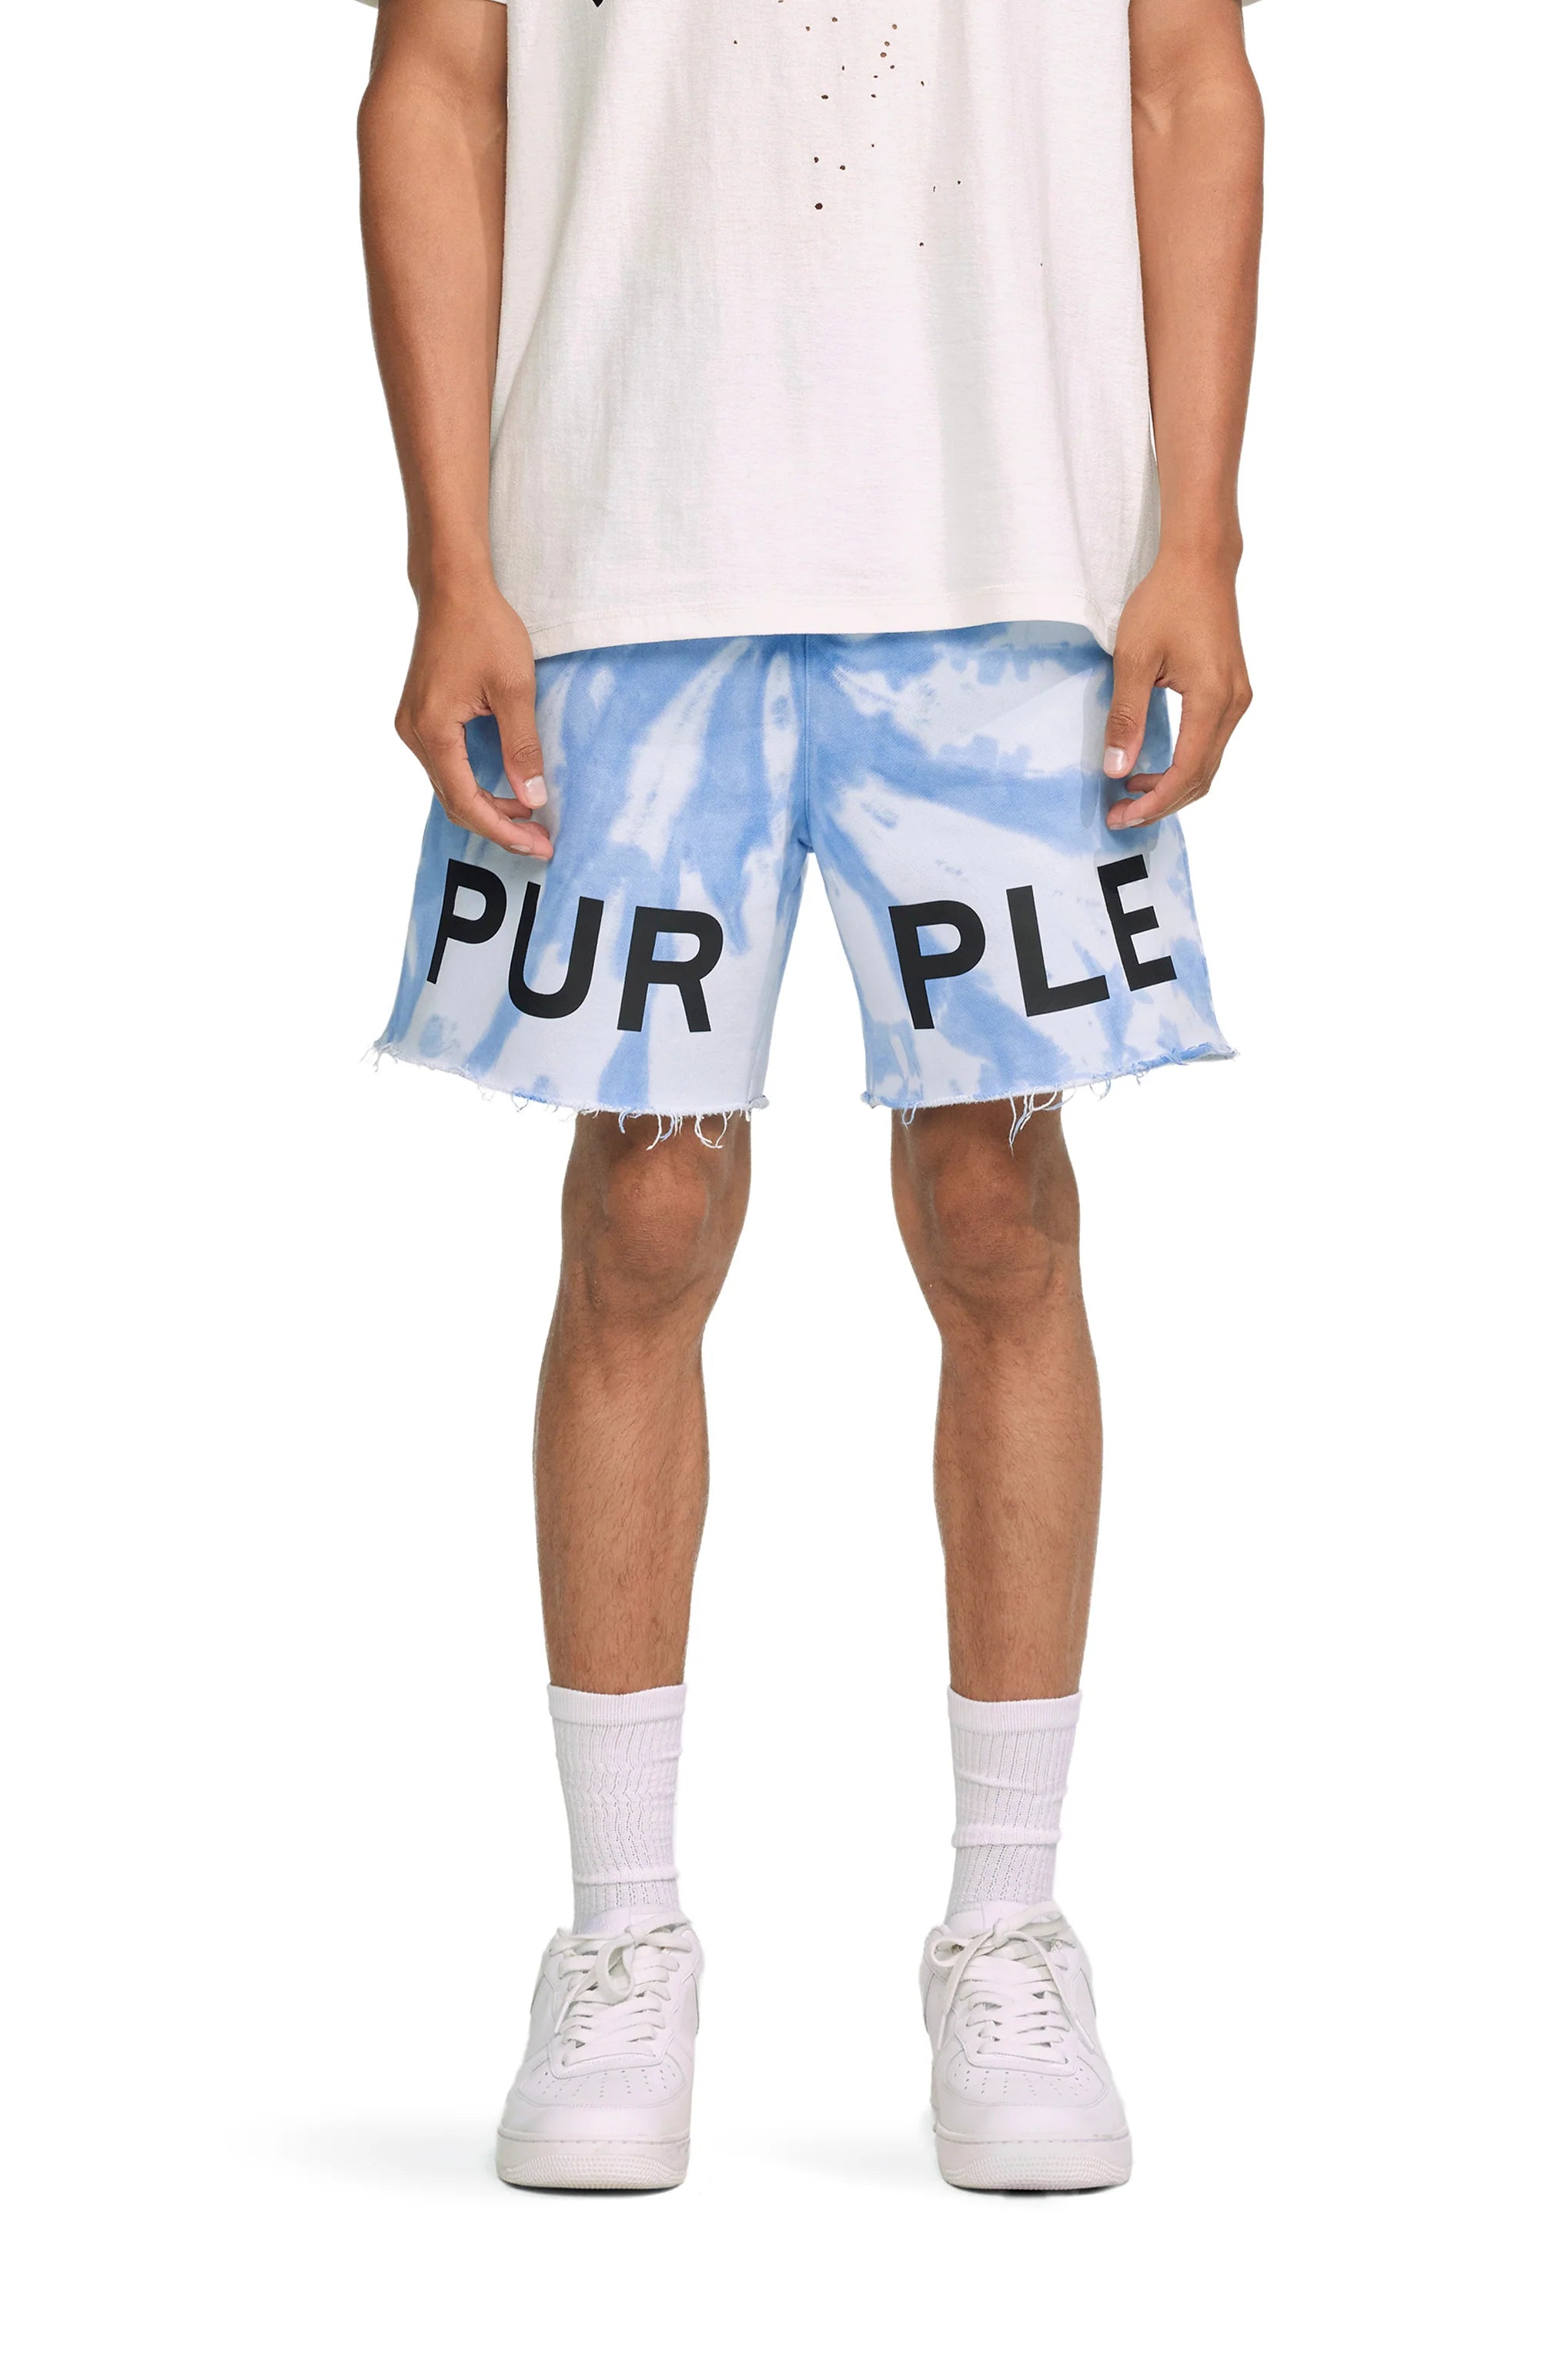 PURPLE BRAND Jumbo Wordmark Tie Dye Shorts